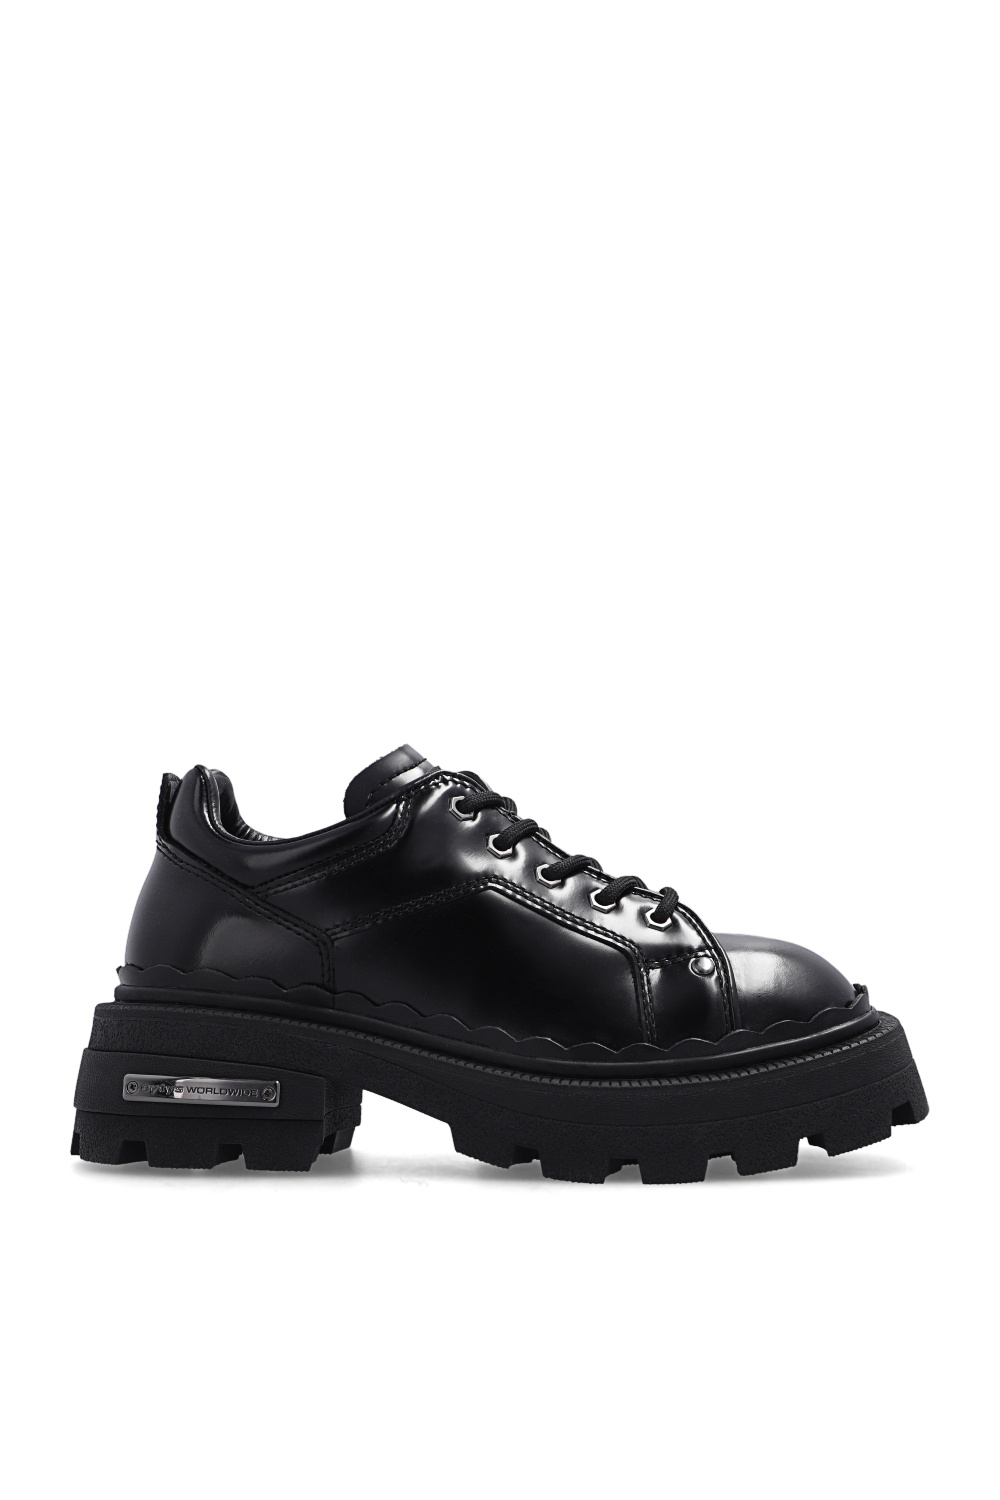 Detroit' chunky sole spessa shoes Eytys - IetpShops Croatia - Nike